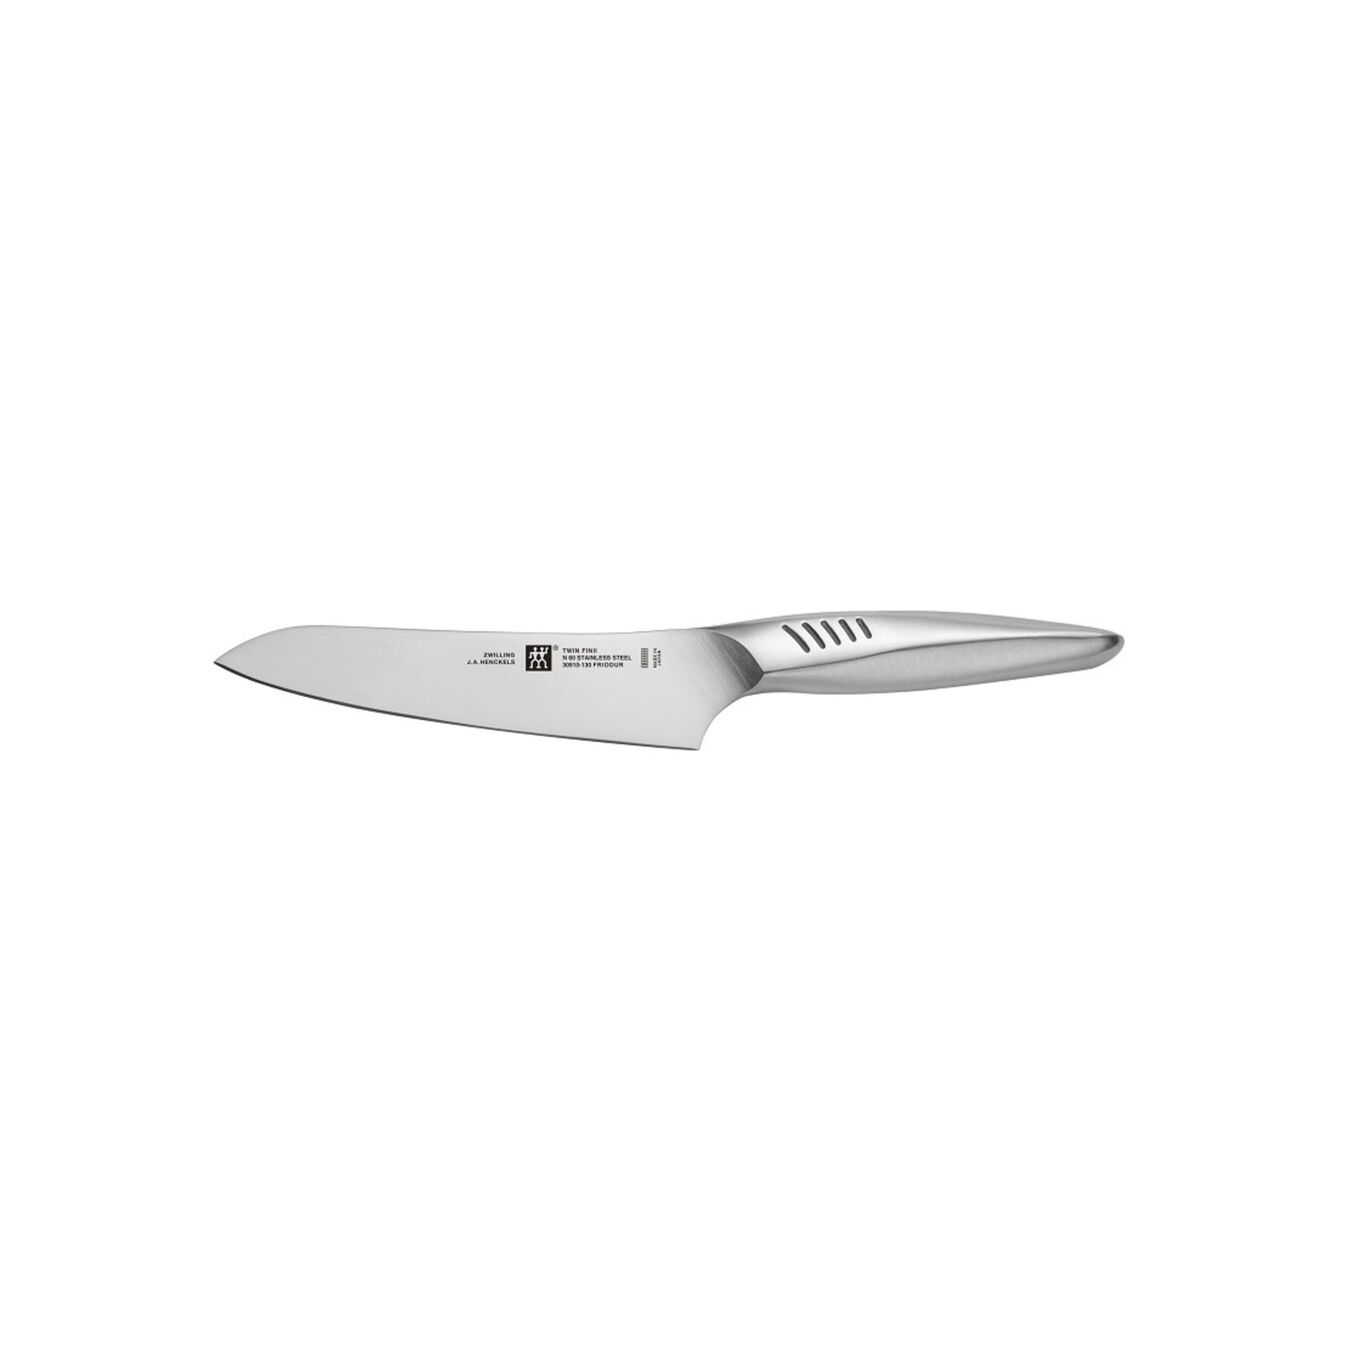 Cuchillo cocinero compacto 13 cm, Acero inoxidable,,large 1